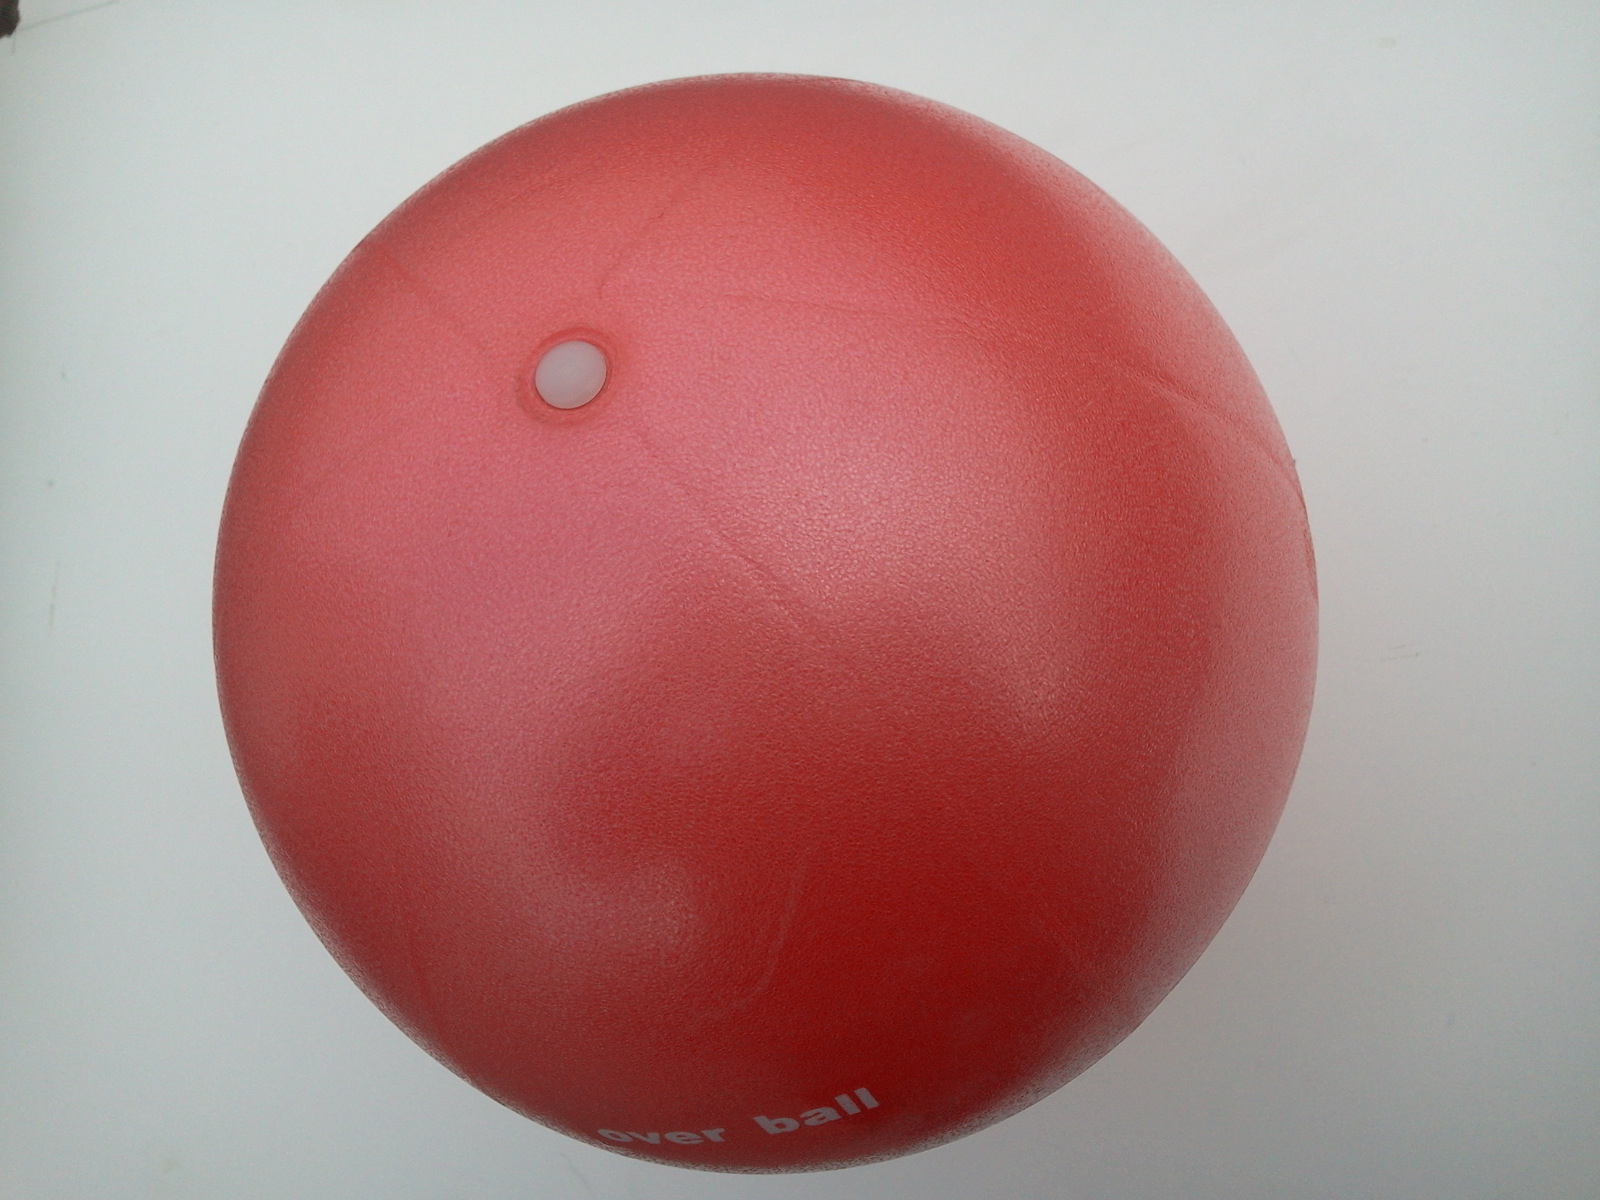 Overball aerobní míč  Unison UN 2023 červený